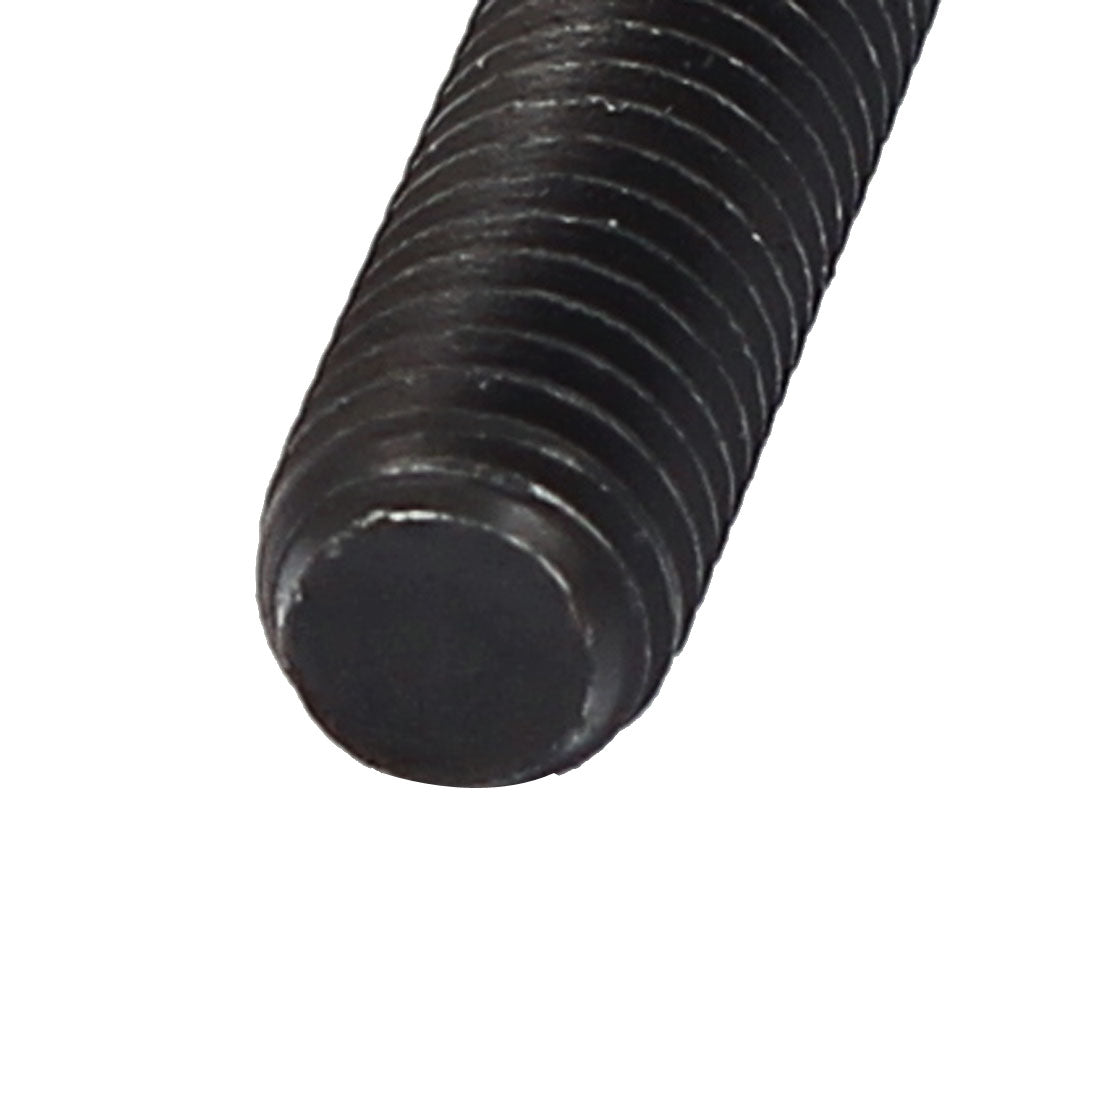 Uxcell Uxcell M3x16mm 12.9 Alloy Steel Screw Cap Point Hex Socket Screws Bolts Black 50Pcs